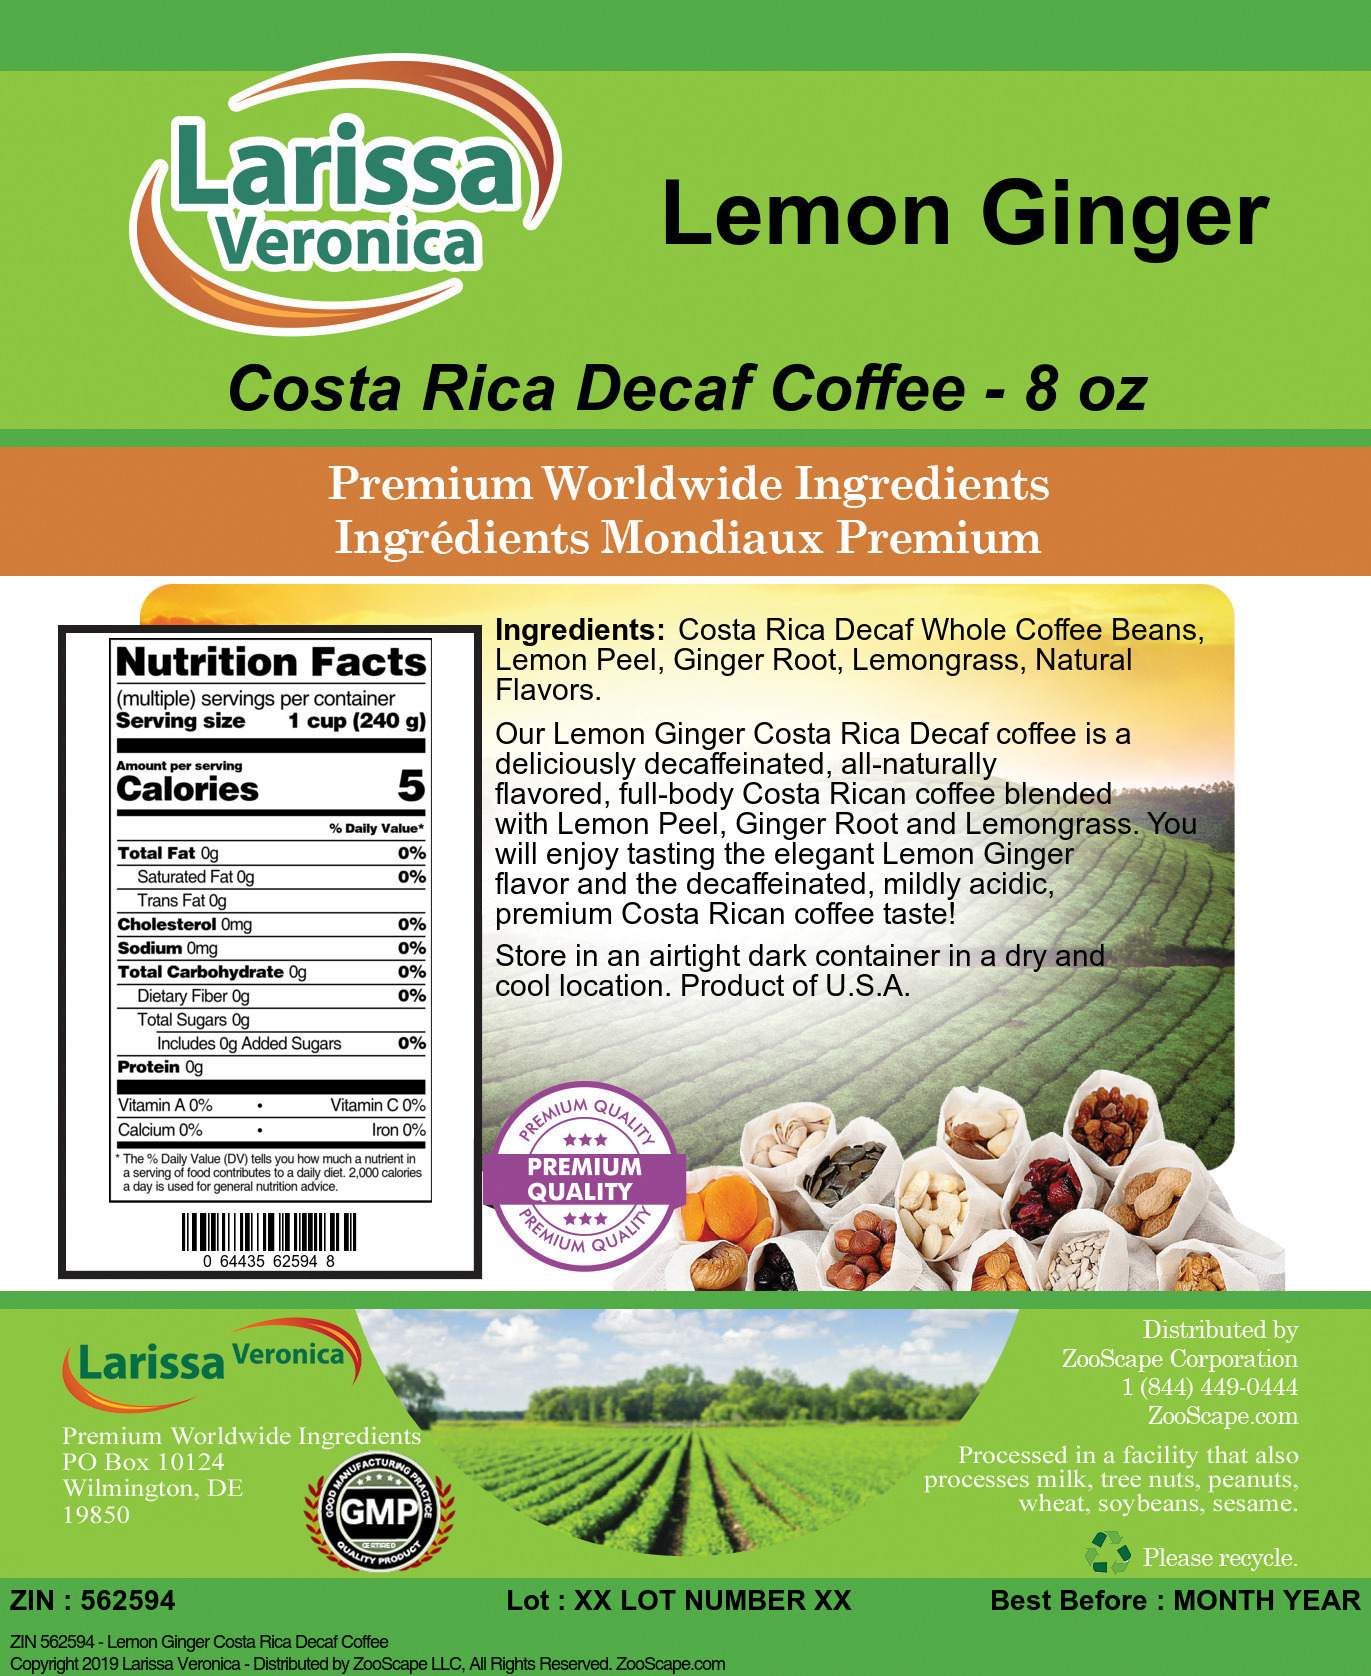 Lemon Ginger Costa Rica Decaf Coffee - Label